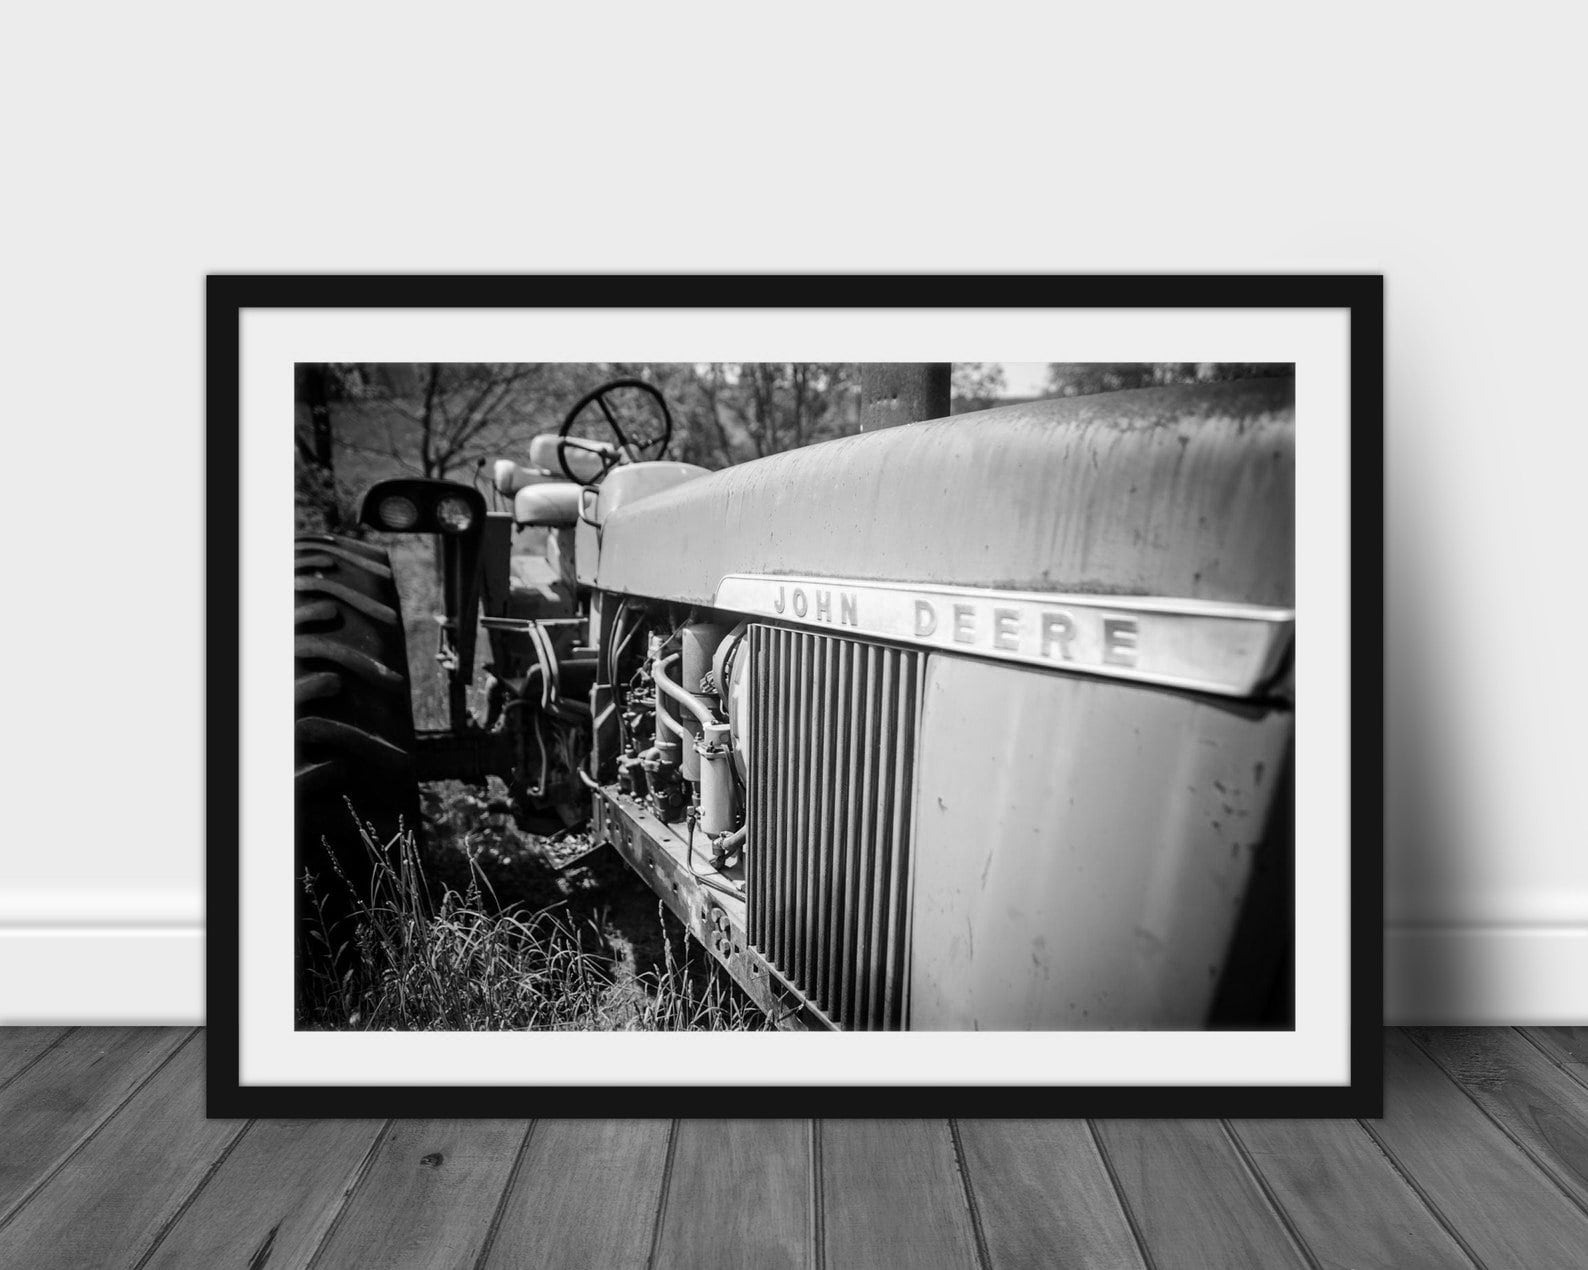 John Deere Tractor Photograph - Black & White, Tractor Photography, Americana Photography, Farmhouse Photography, Metal Wall Art